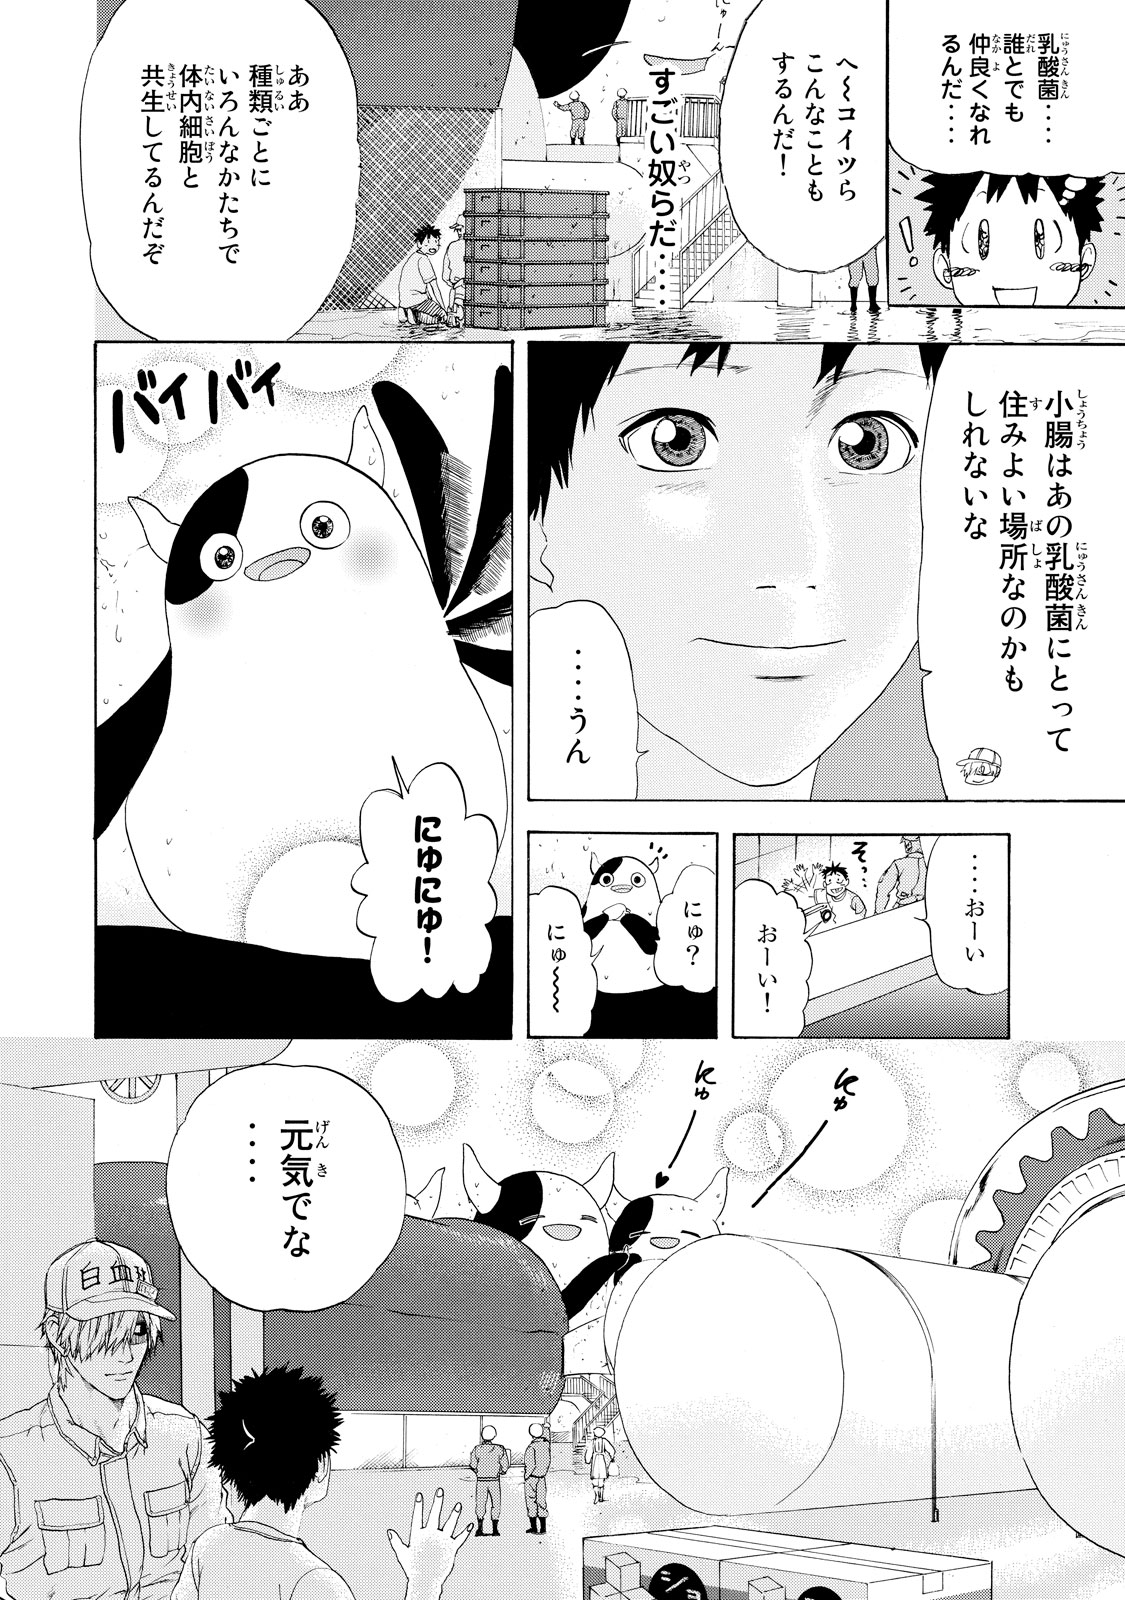 Hataraku Saibou - Chapter 21 - Page 8